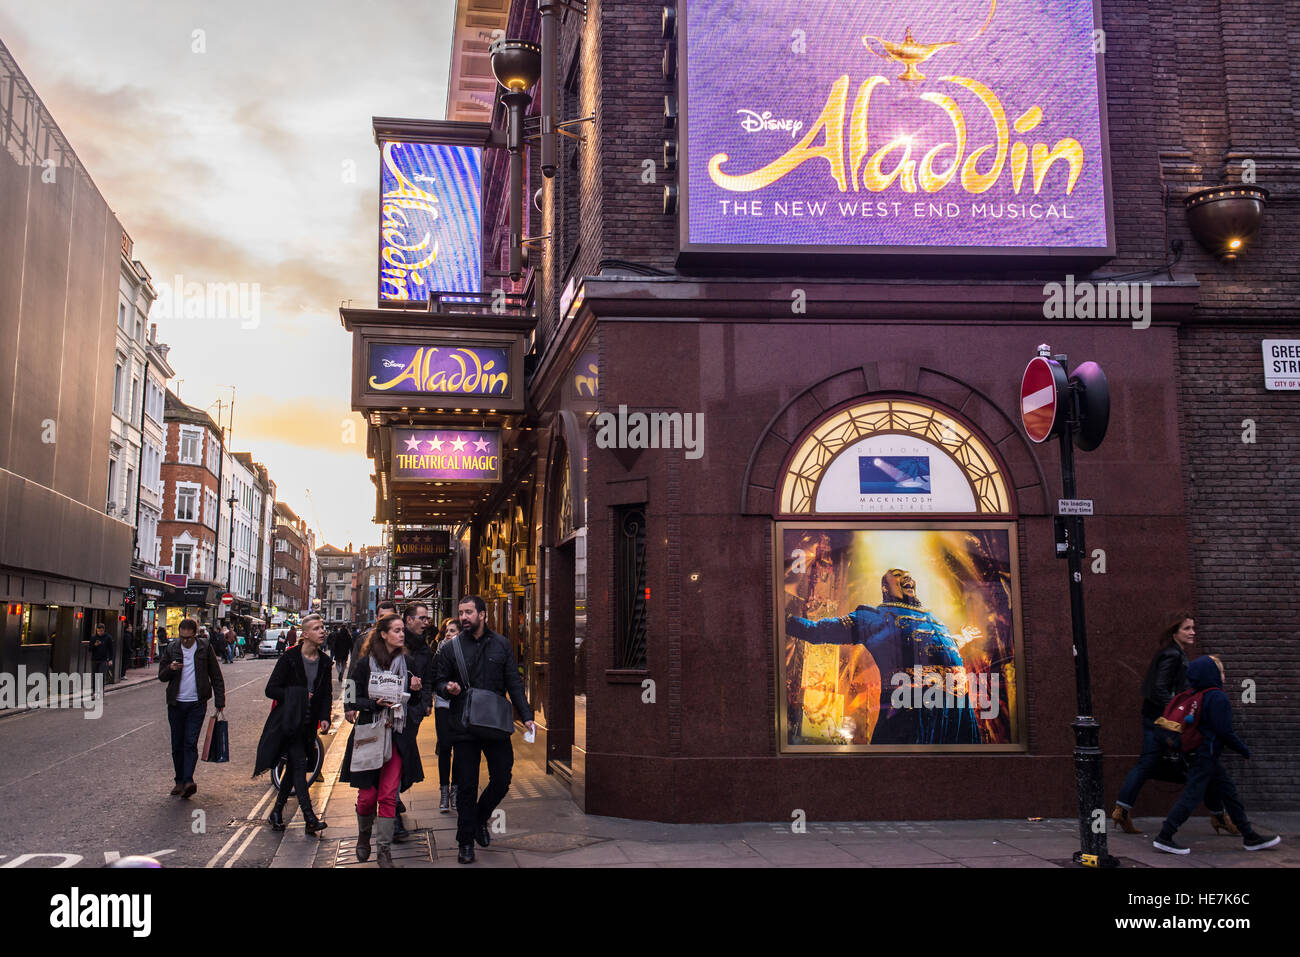 Street View di Prince Edward Theatre in old compton Street, Soho, Londra uk. ora giocando ad Aladdin, Disney's new musical. Foto Stock